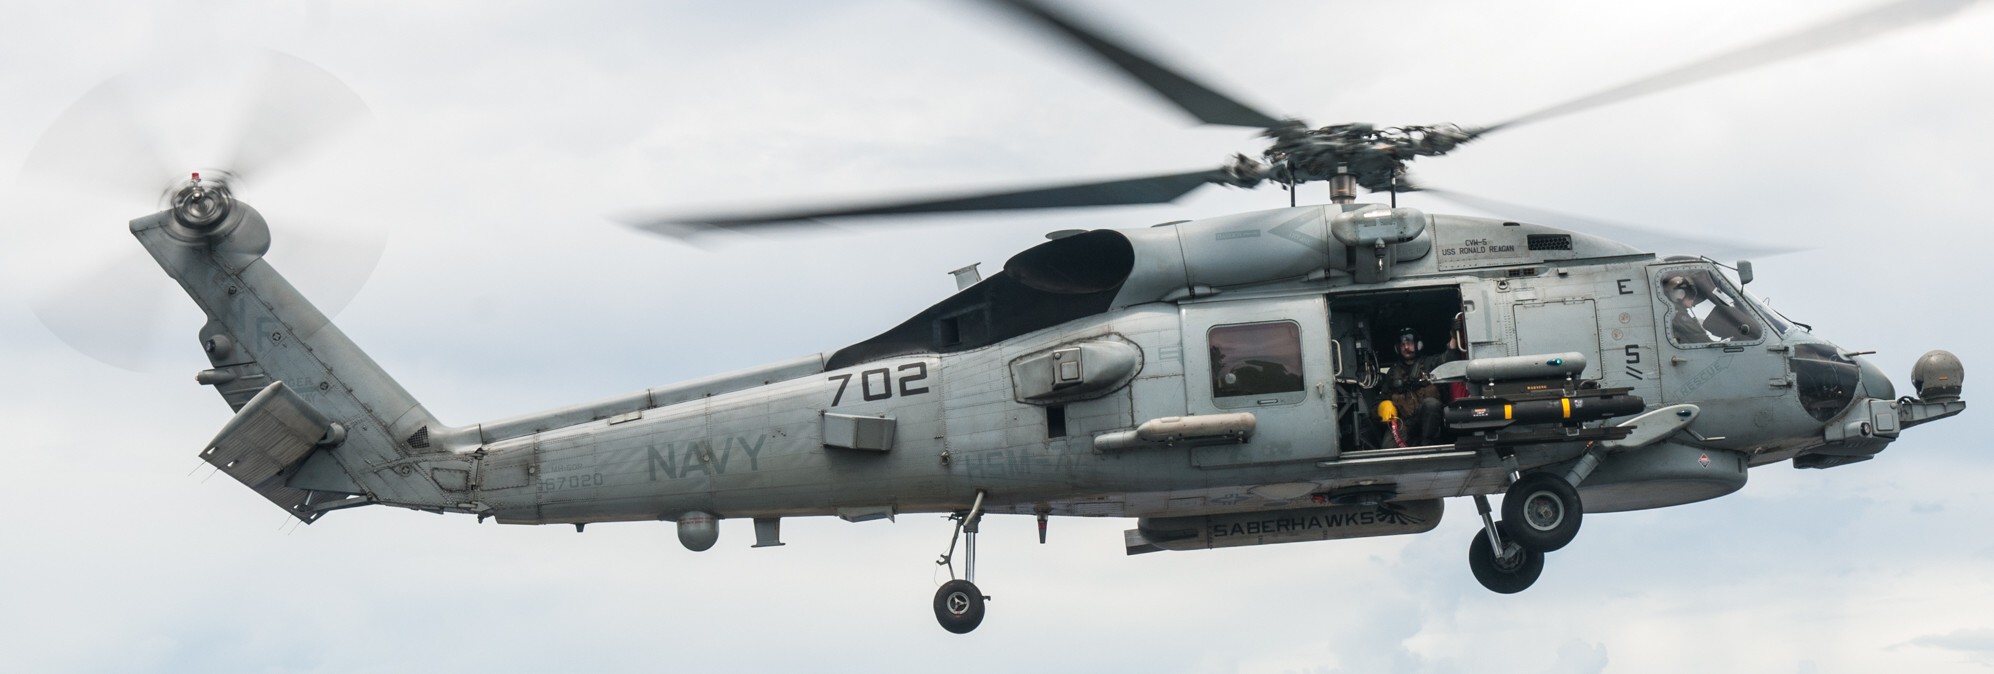 hsm-77 saberhawks helicopter maritime strike squadron mh-60r seahawk cvw-5 cvn-76 uss ronald reagan 2016 58